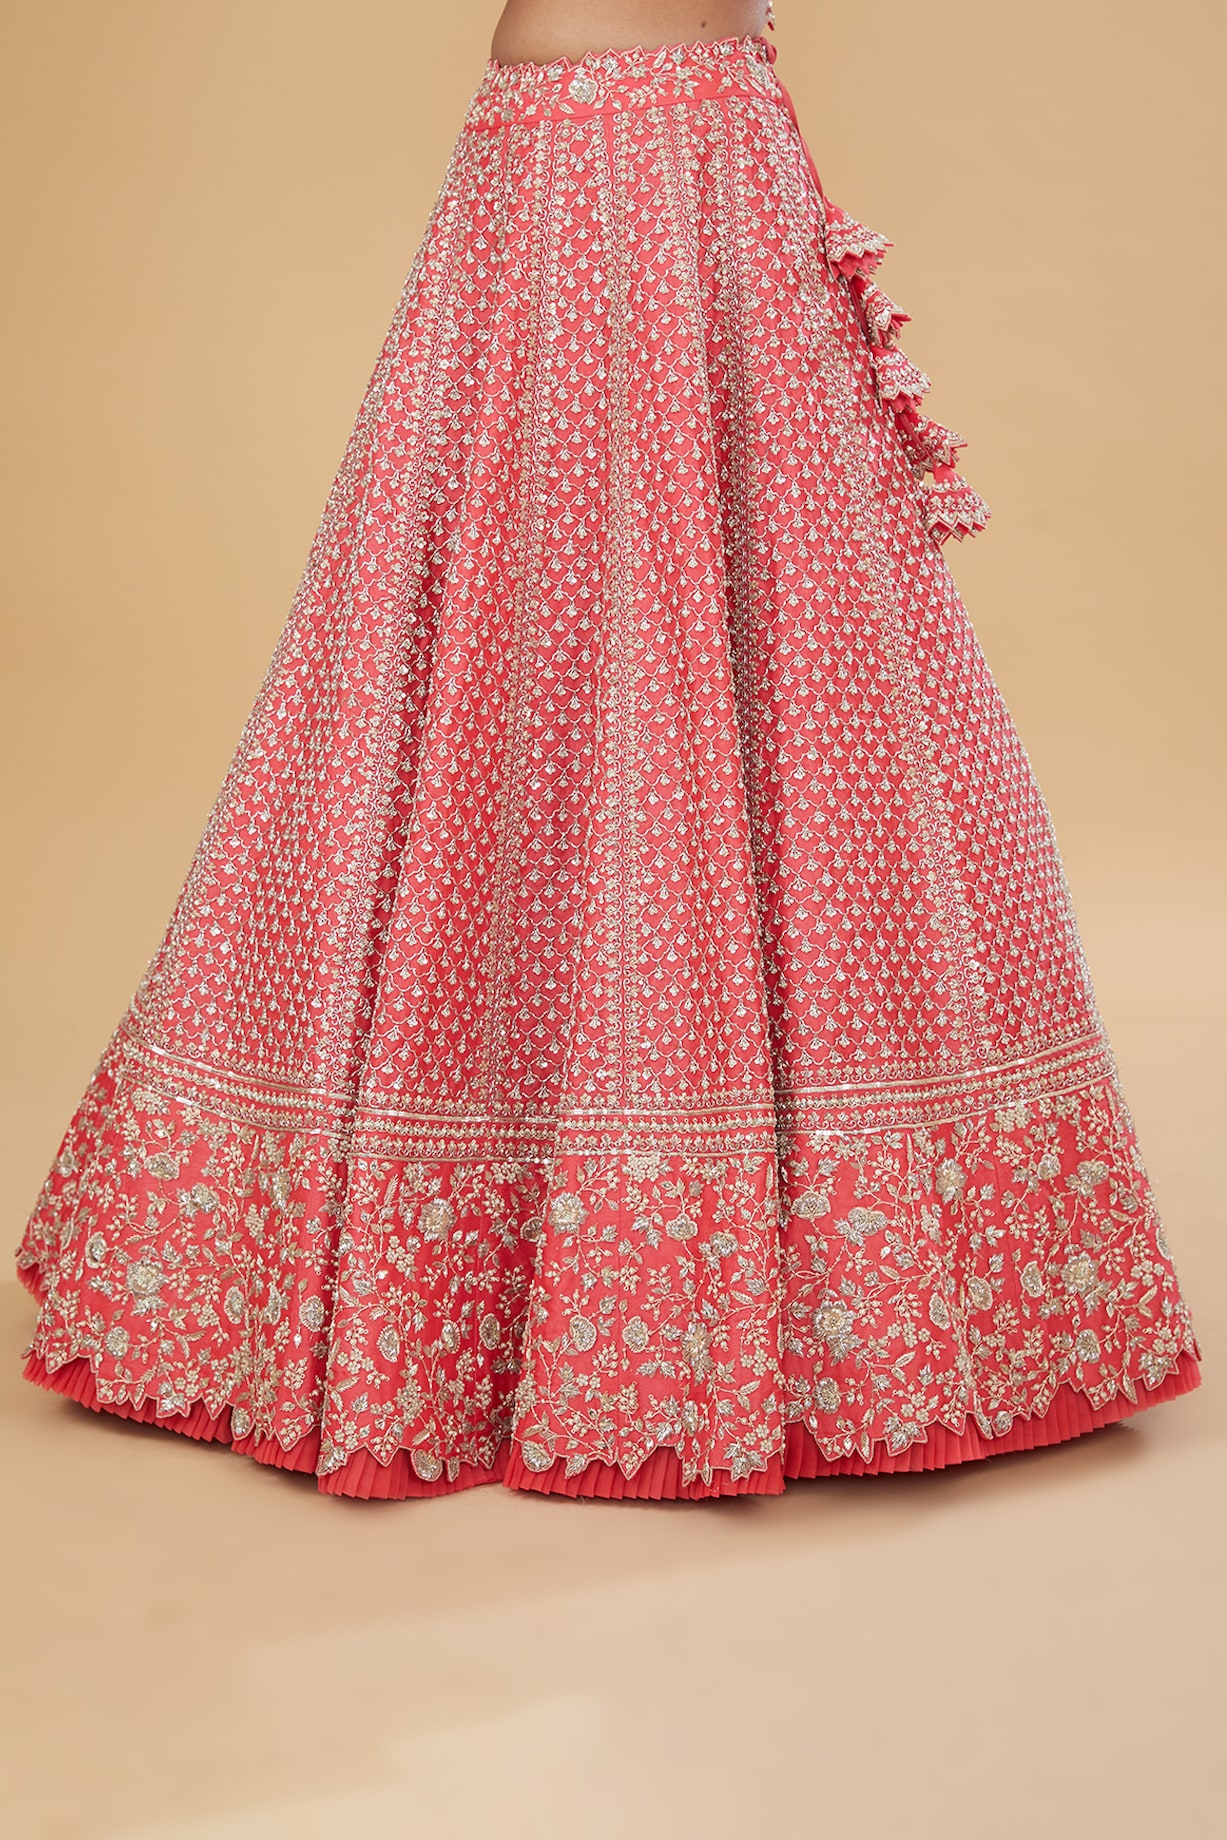 Anushree Reddy - Peach Organza Embroidered Designer Bridal Lehenga Set for Women at Pernia's Pop Up Shop